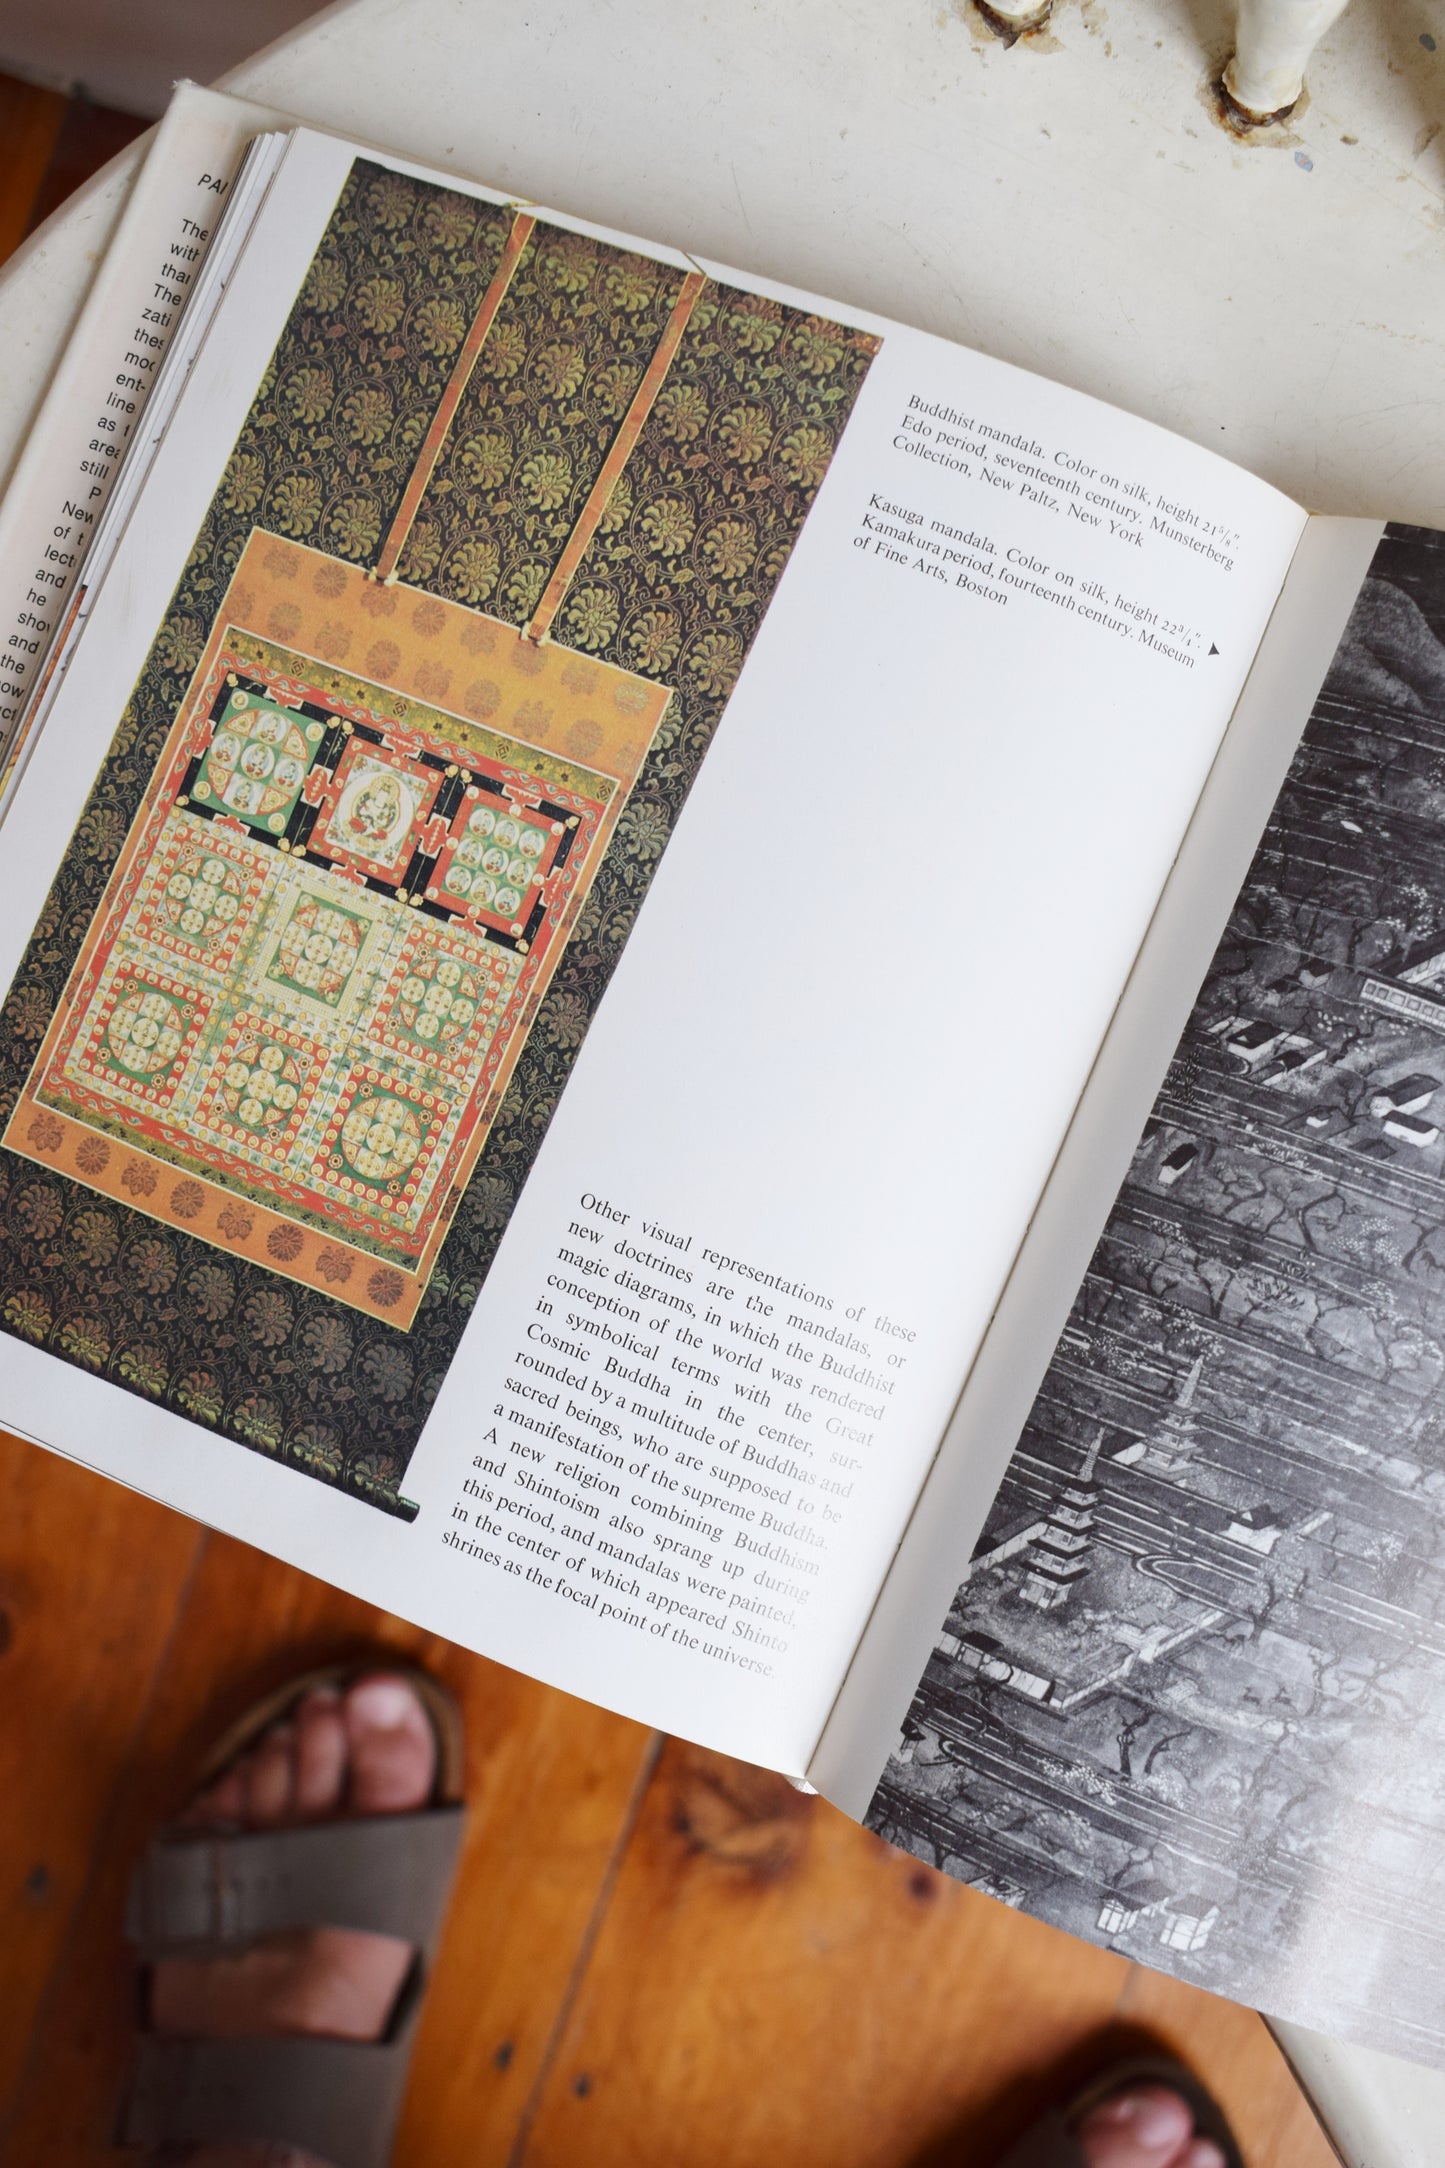 Art Book : Art of the Far East text by Hugo Munsterberg